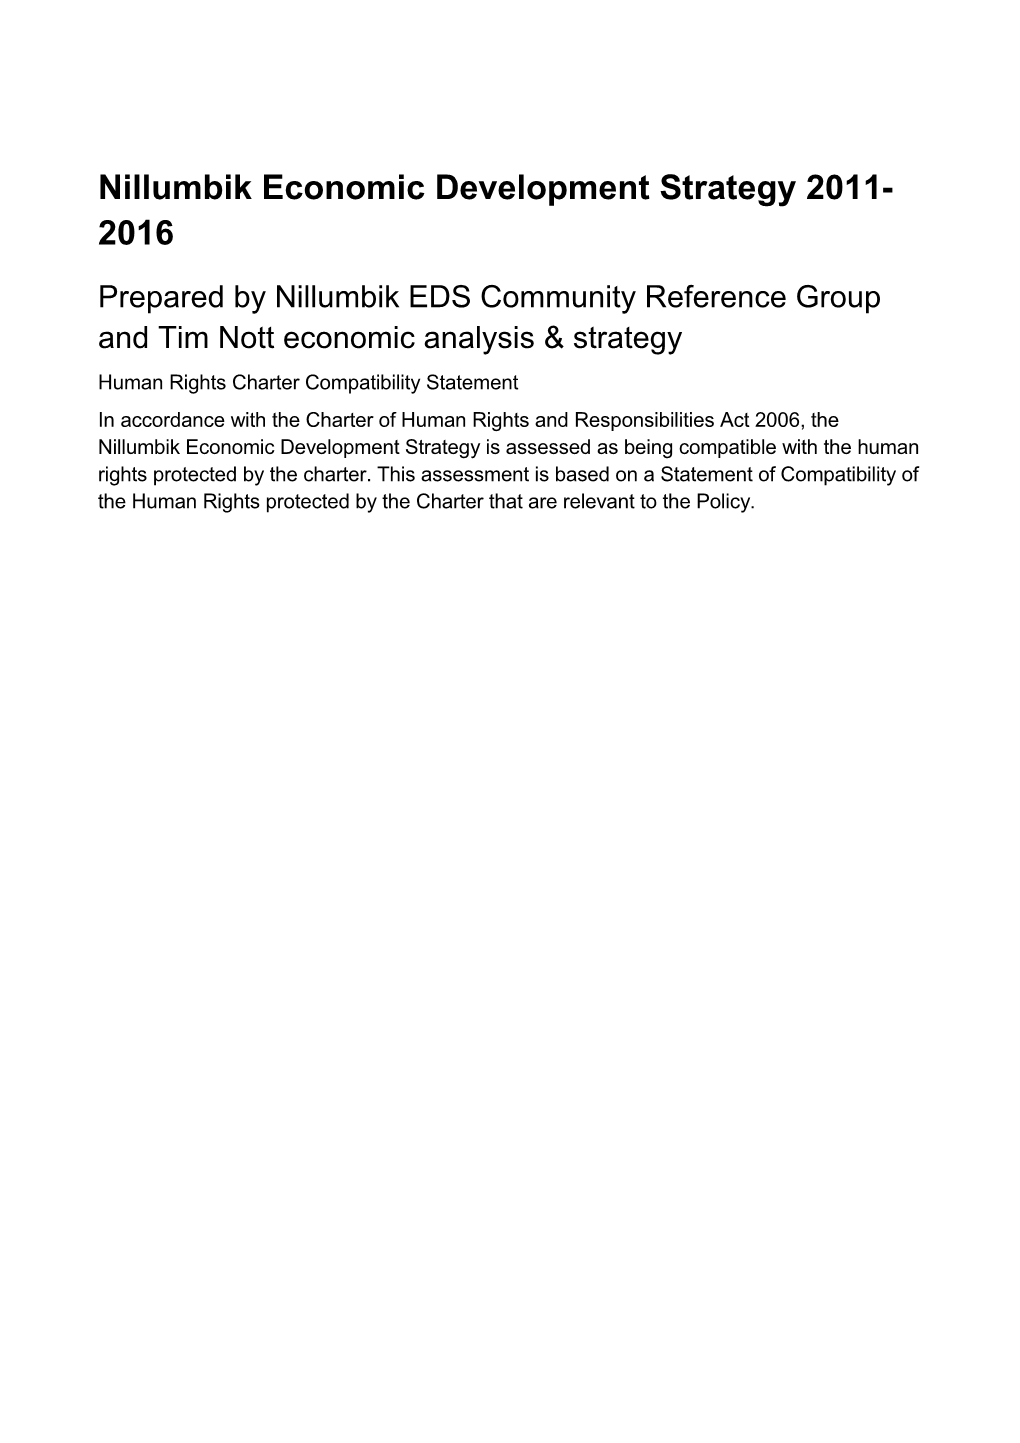 Nillumbik Economic Development Strategy 2011-2016